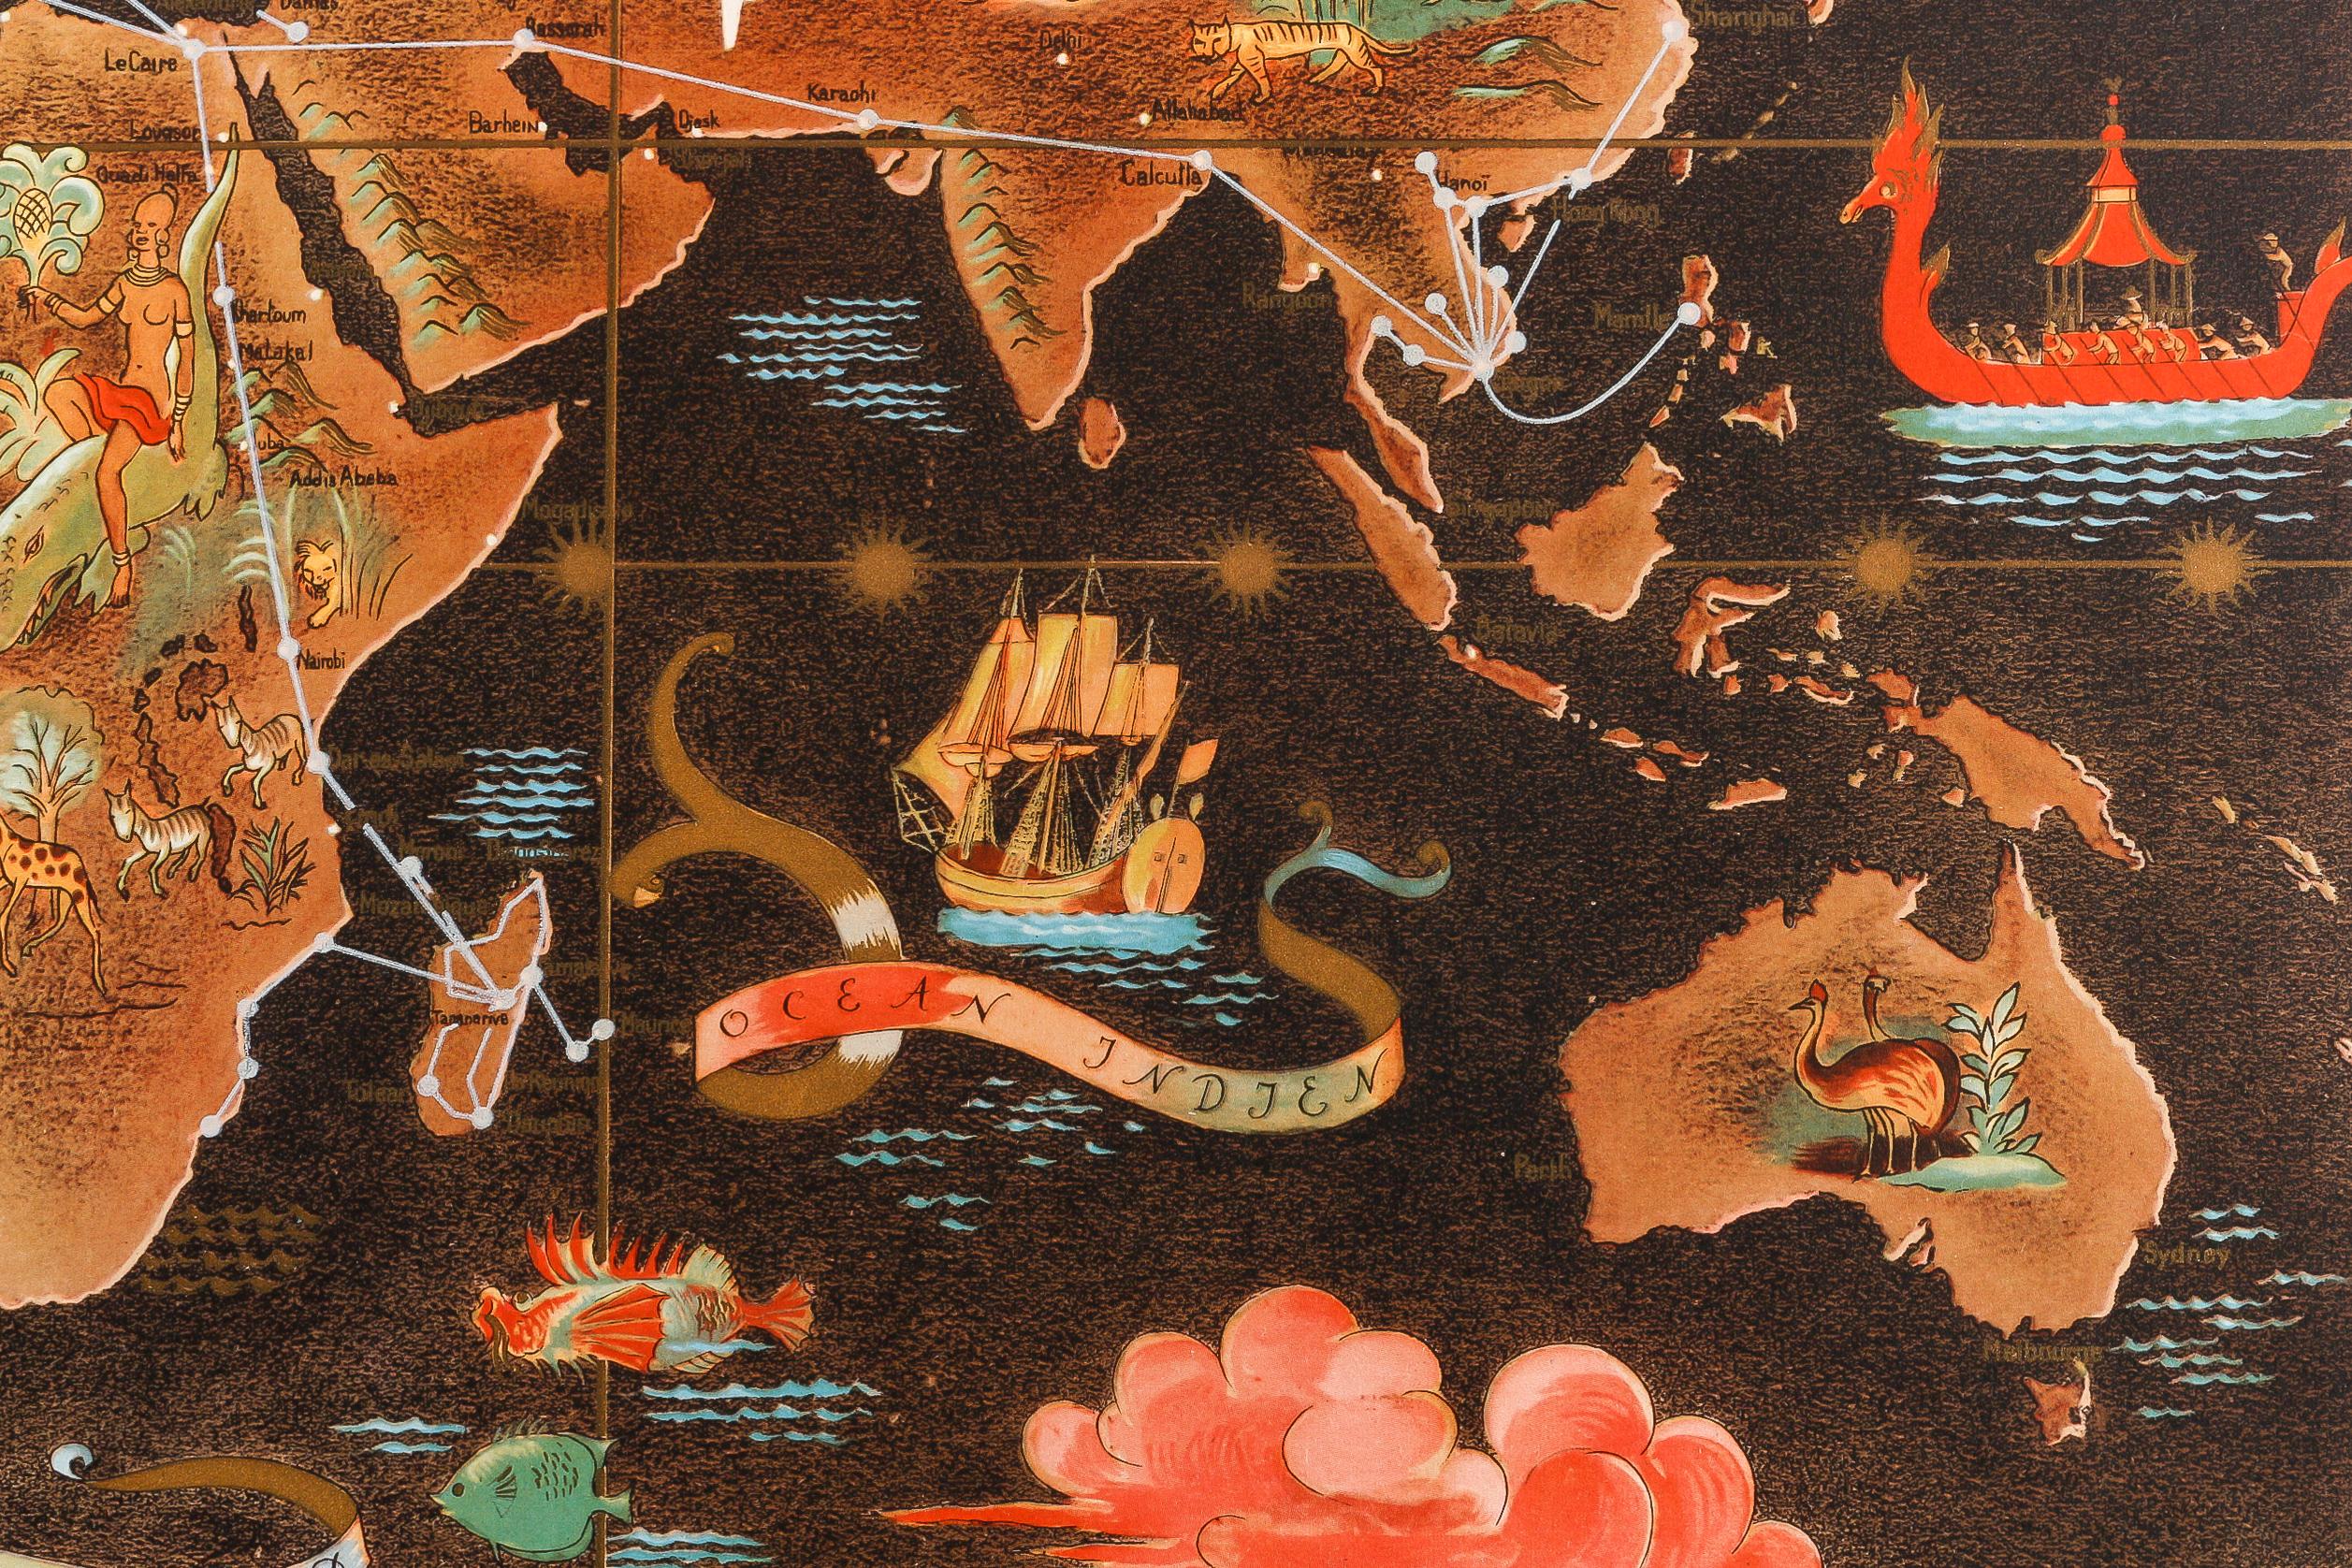 Mid-Century Modern Original Vintage Poster, Lucien Boucher, Air France, World Map Planisphere, 1948 For Sale